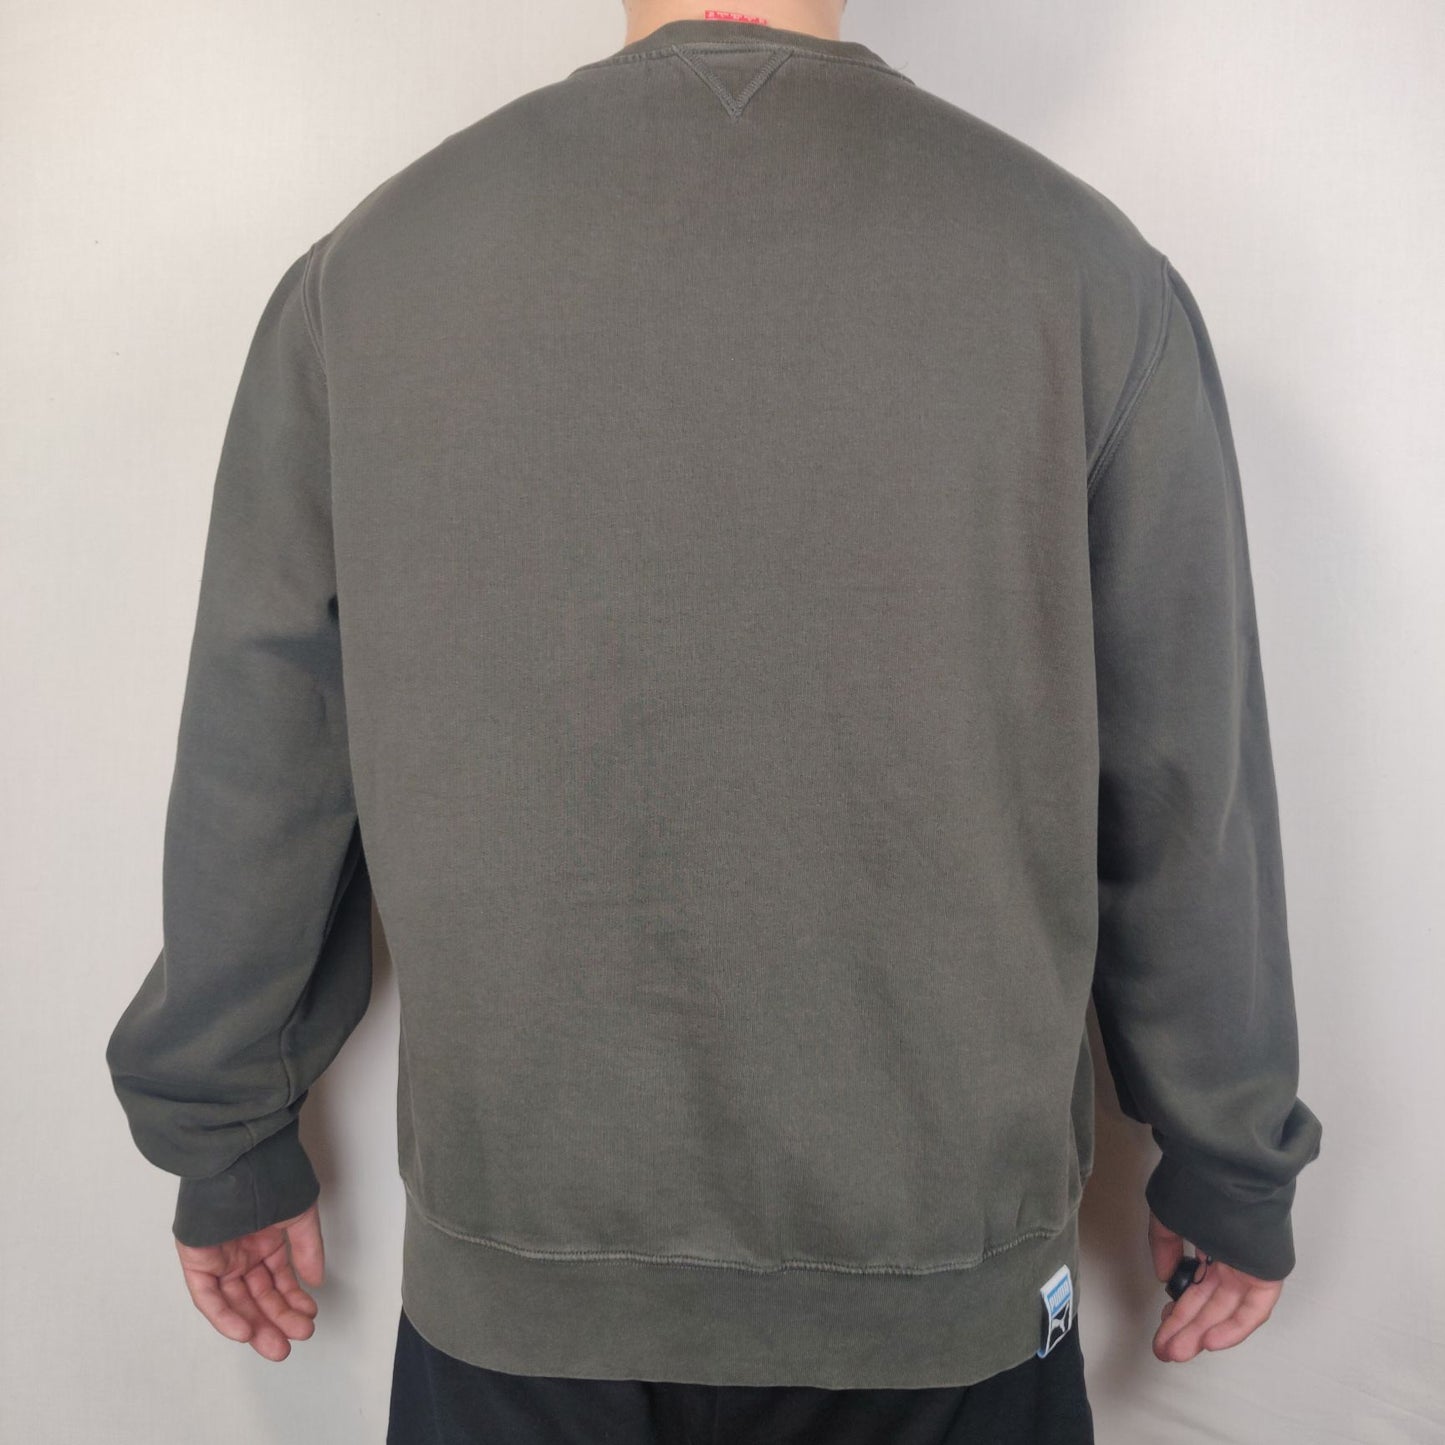 Puma Original Athletic Green Sweatshirt Long Sleeve Men Size XL